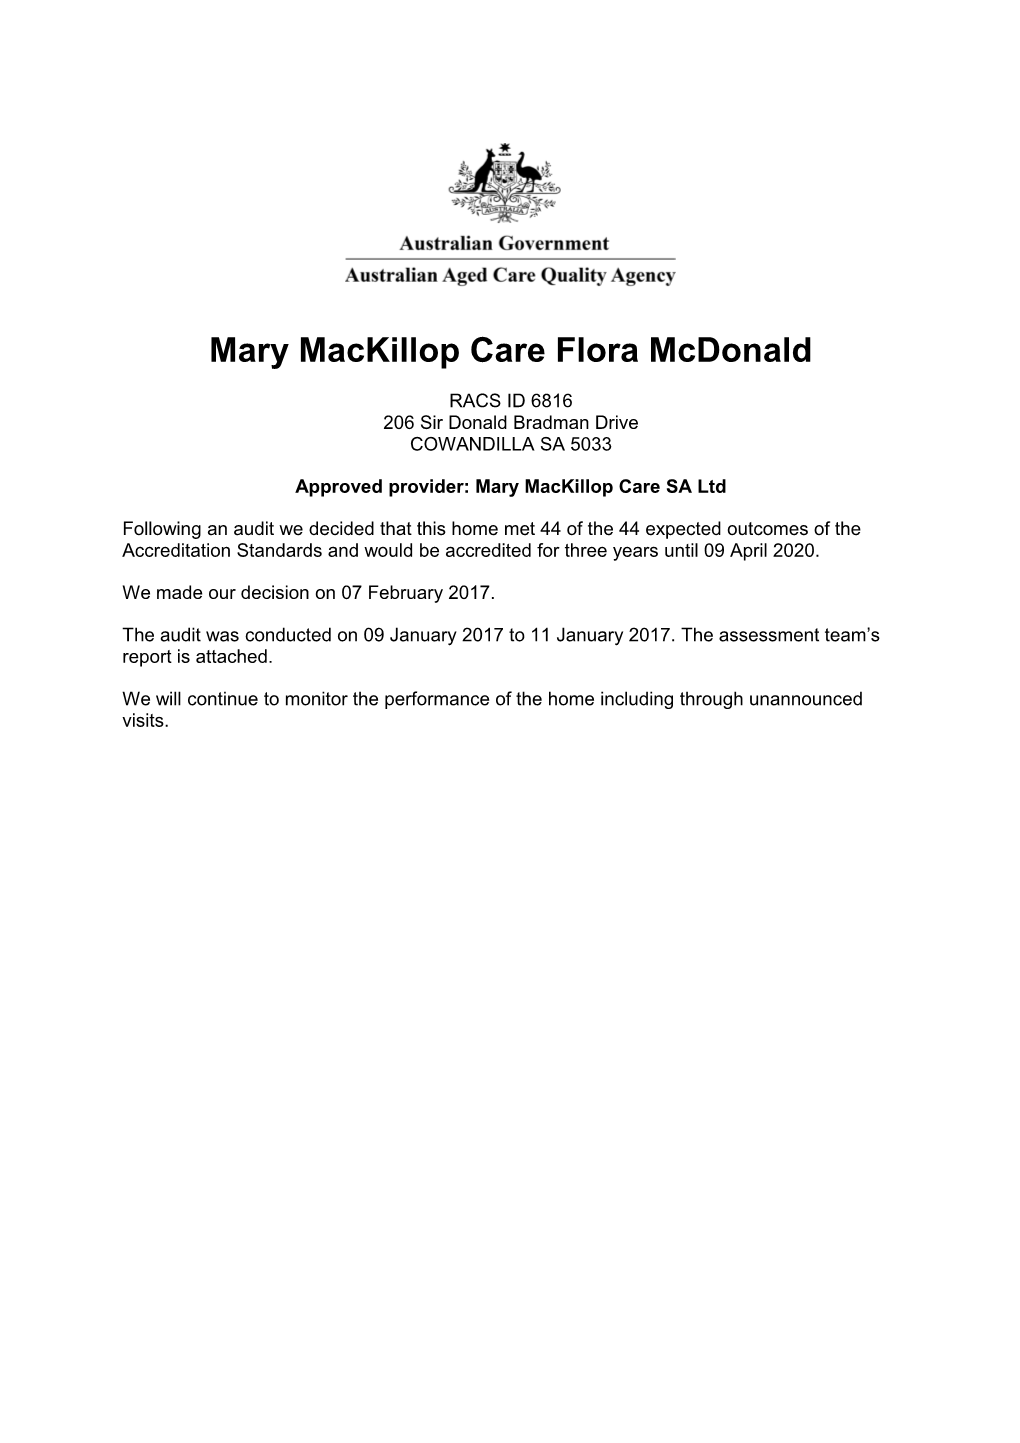 Mary Mackillop Care Flora Mcdonald